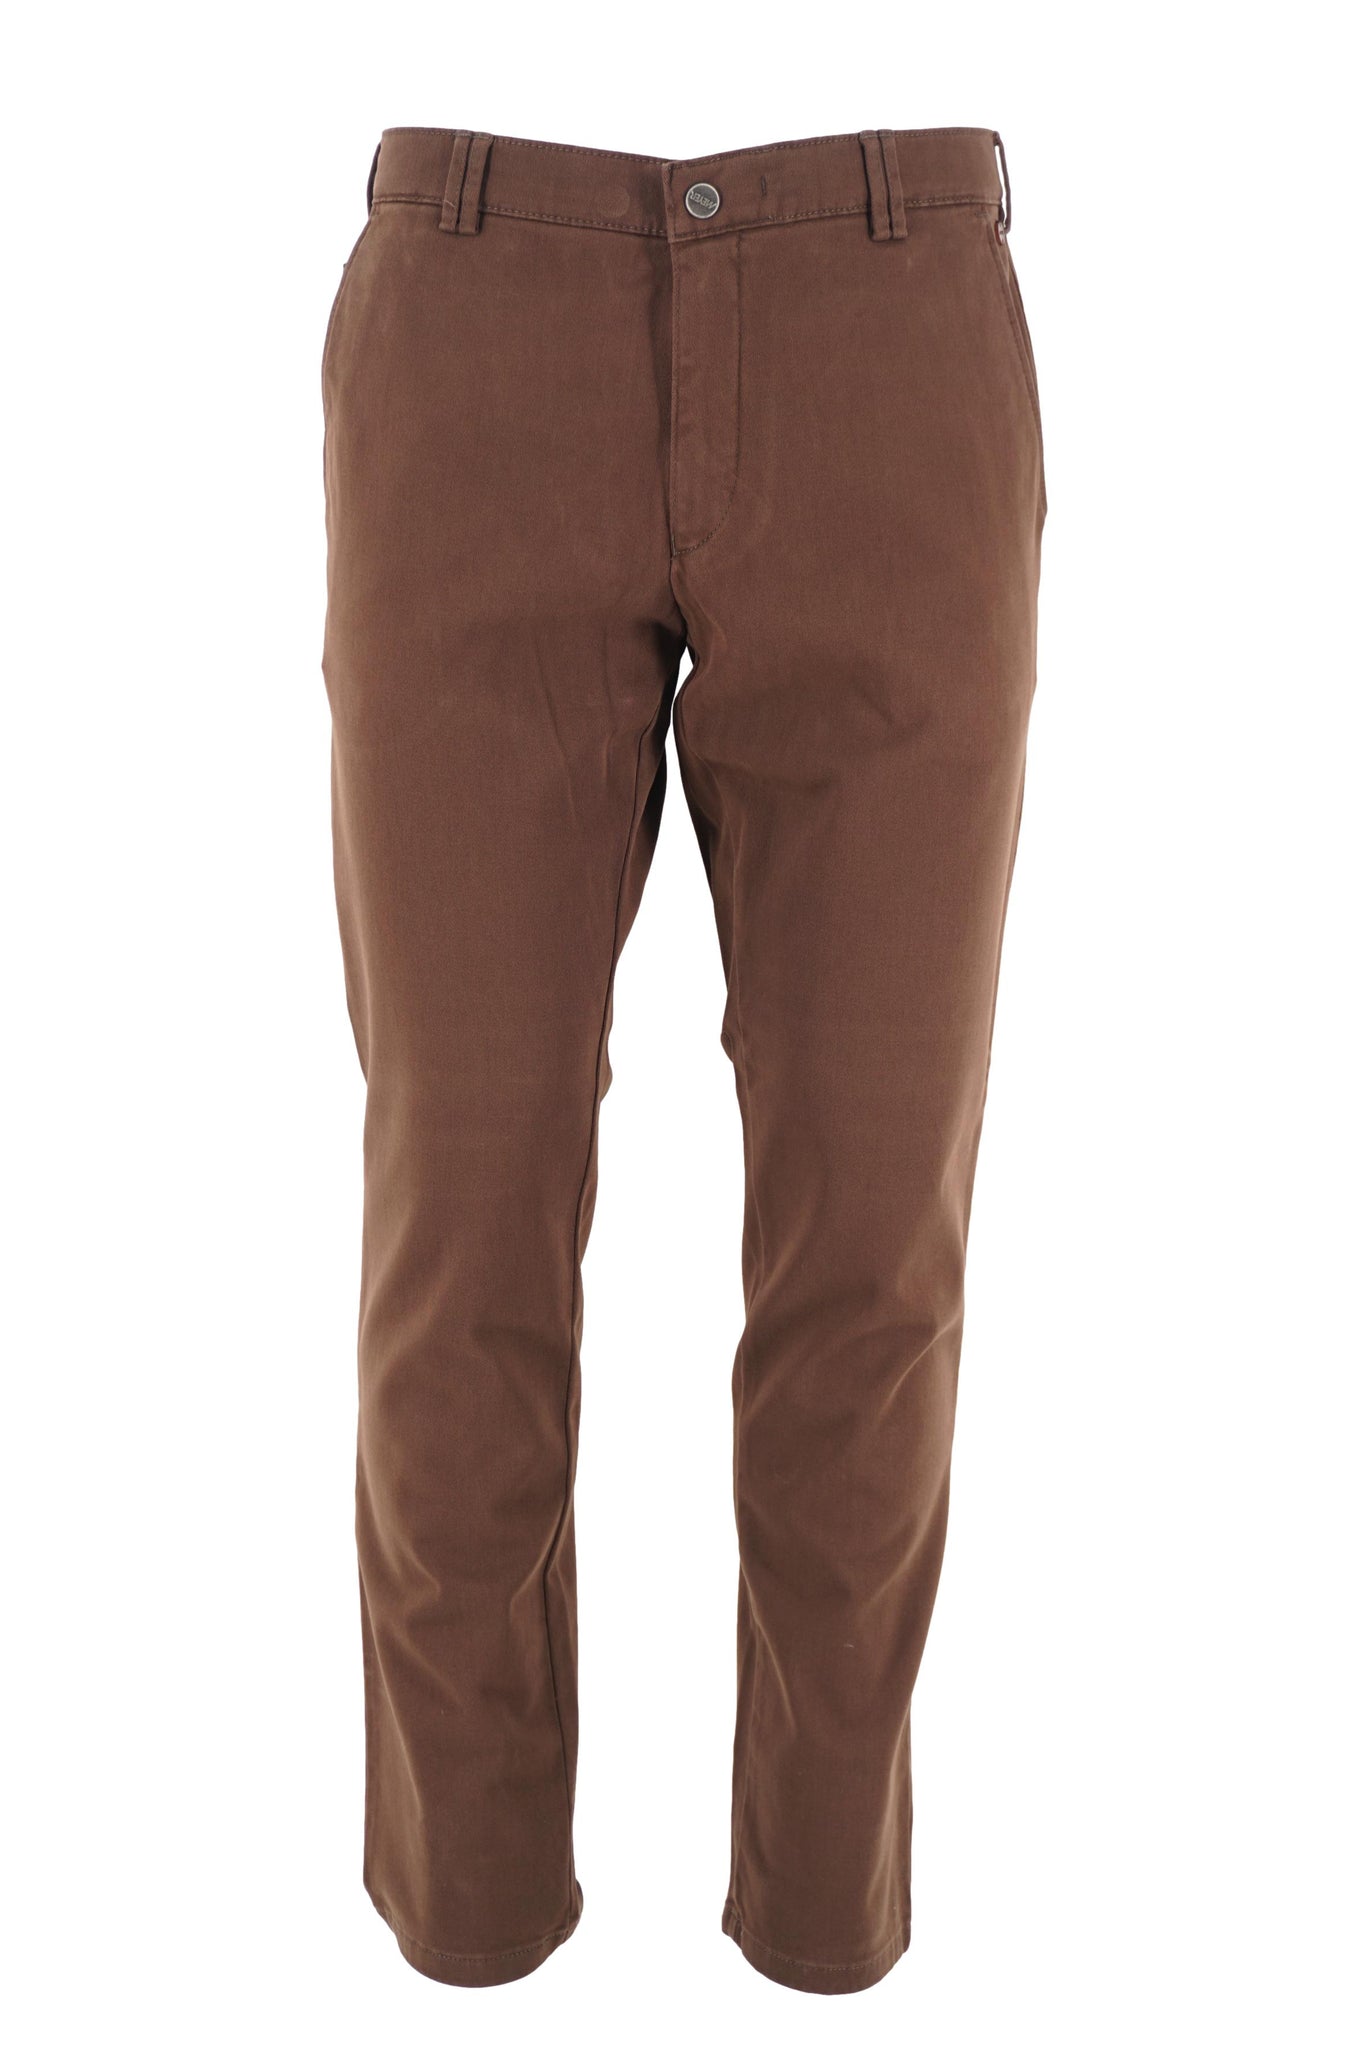 Pantalone Chino Modello Bonn / Marrone - Ideal Moda